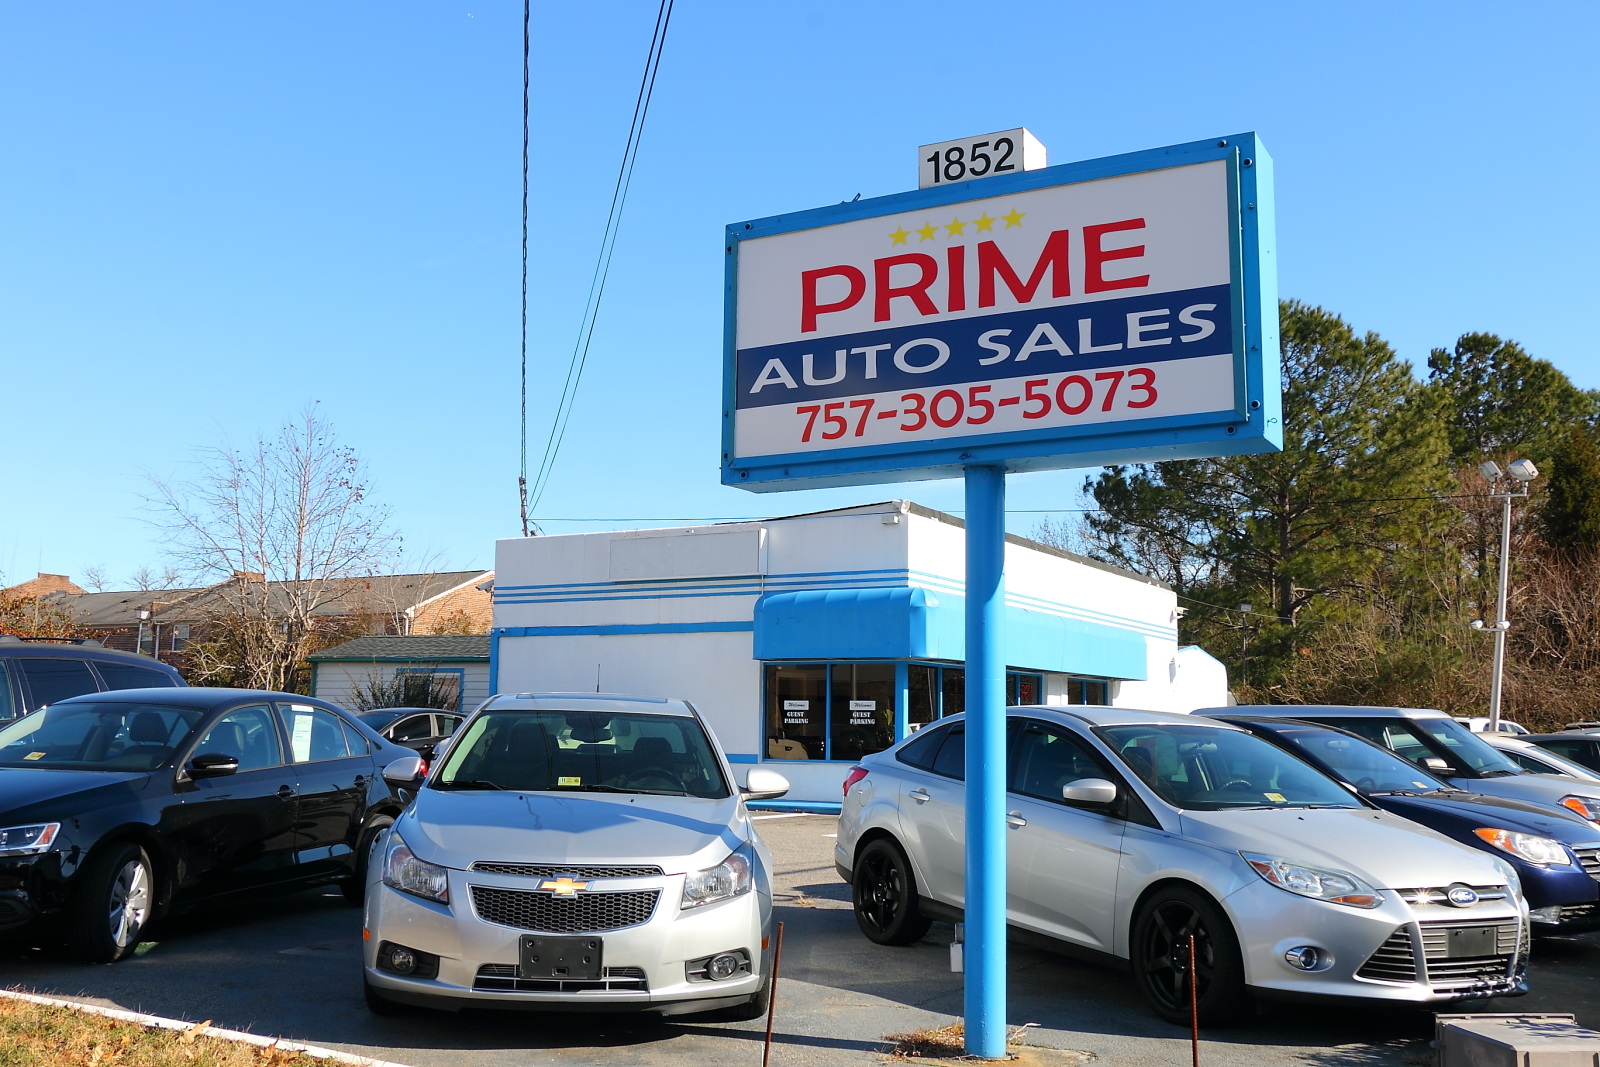 Prime Auto Sales